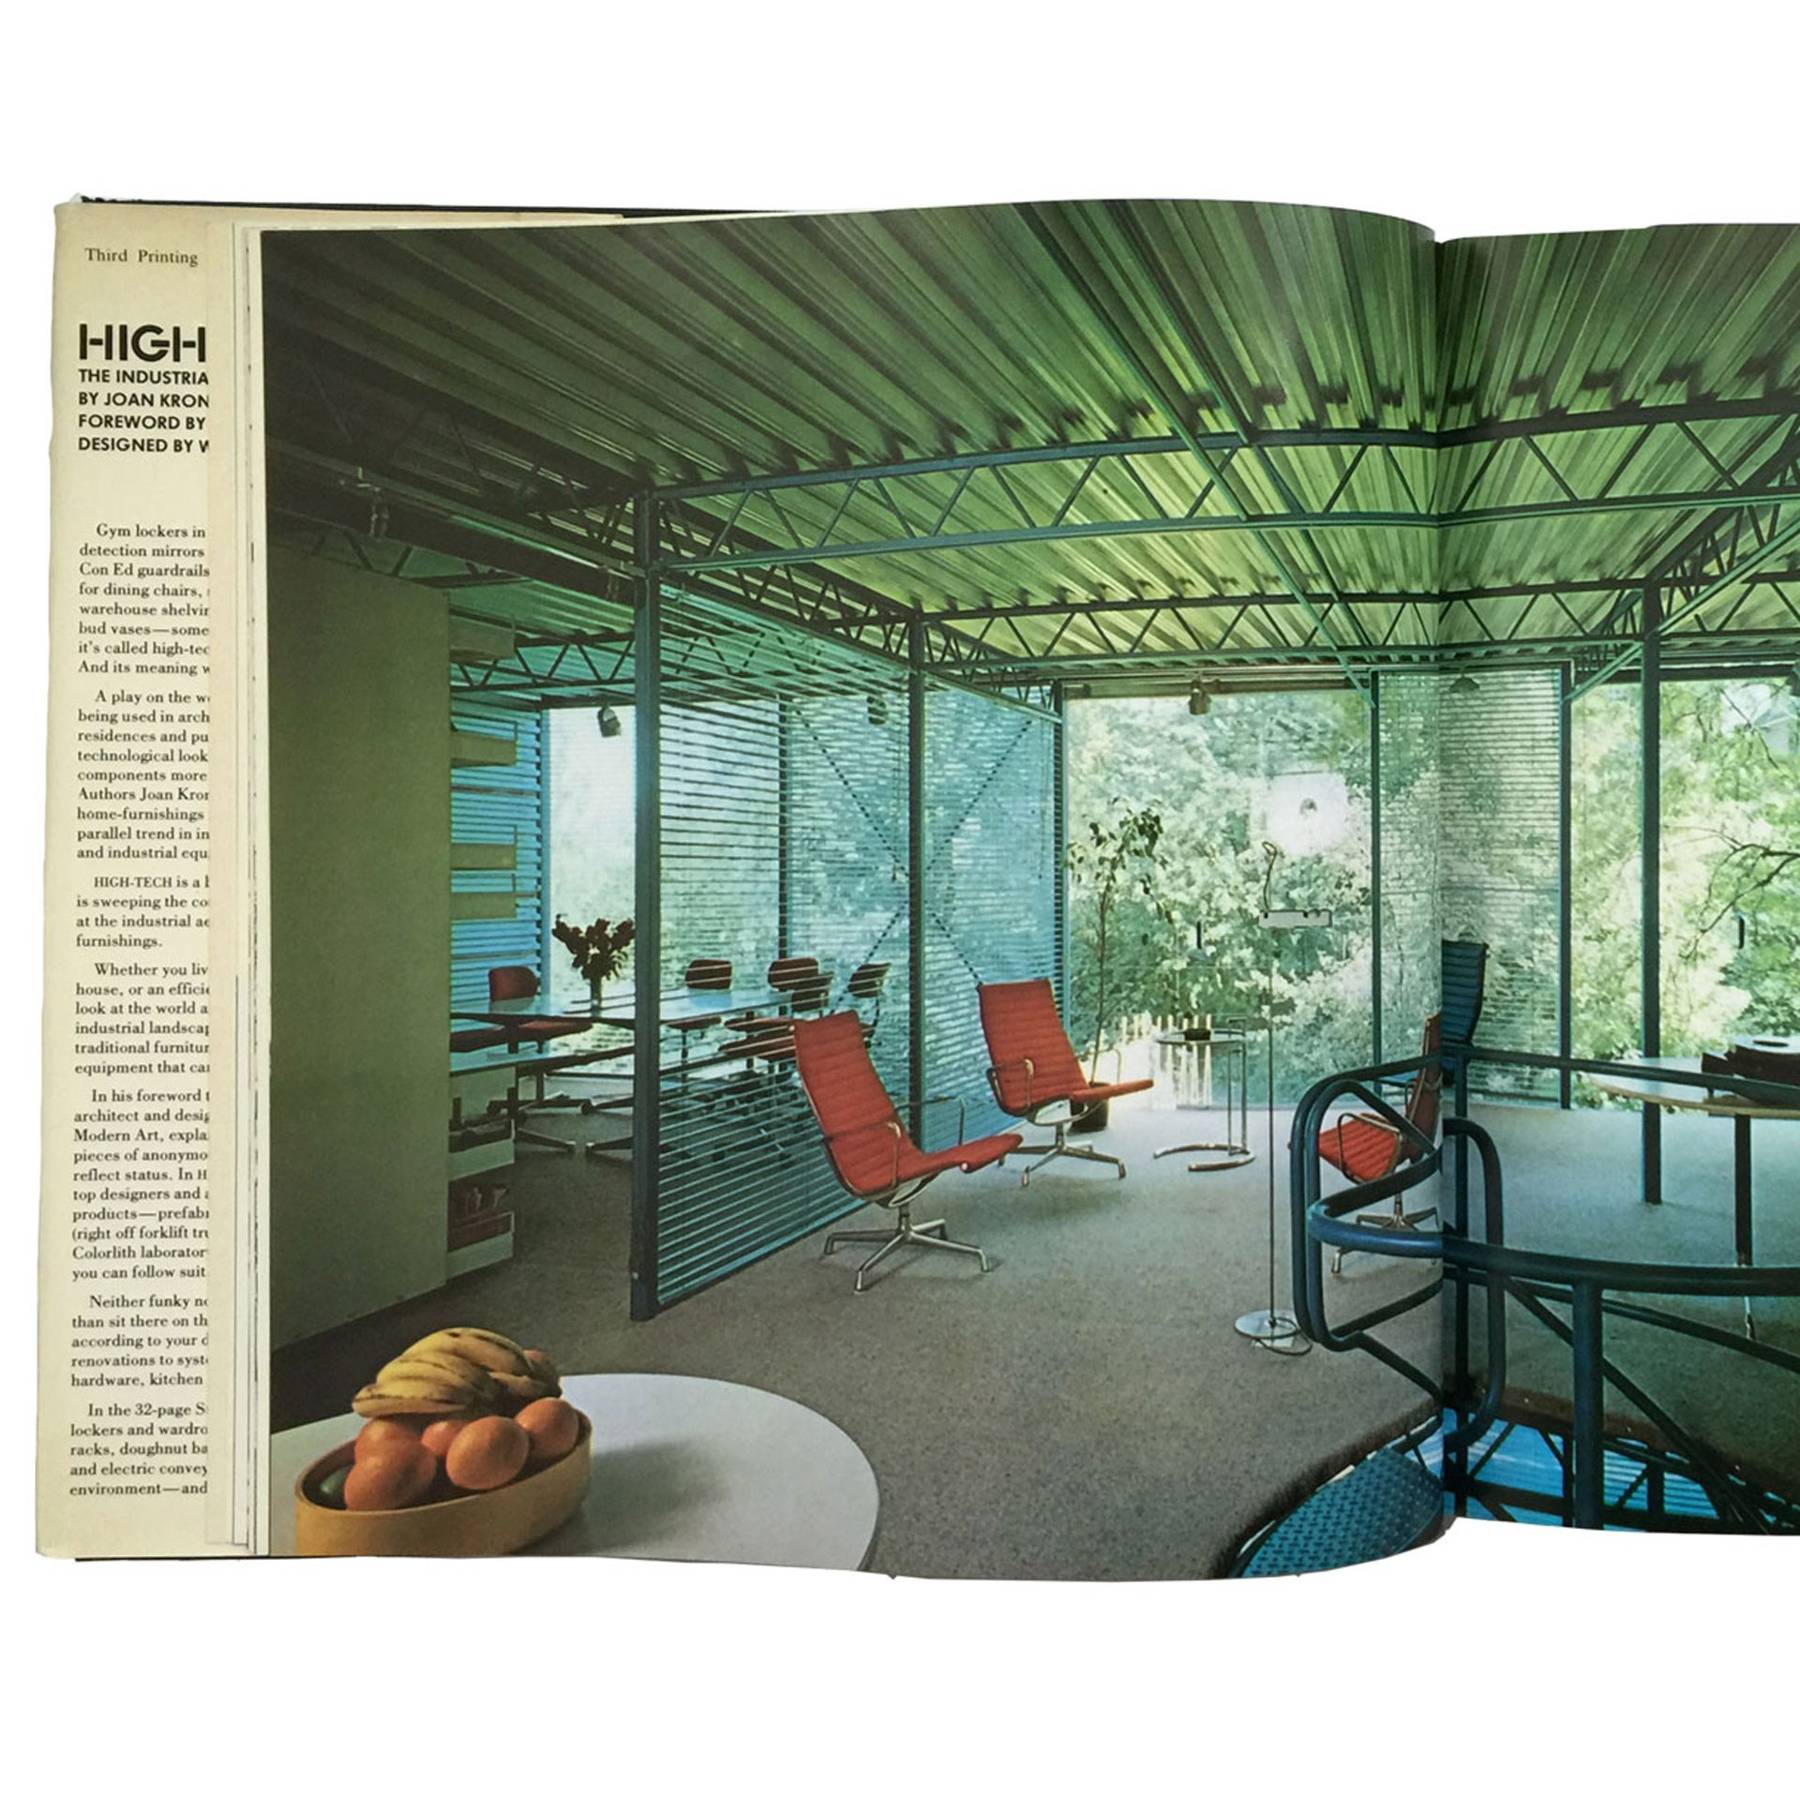 IDEA Books - Top Vintage Interior Design Architecture Books | House